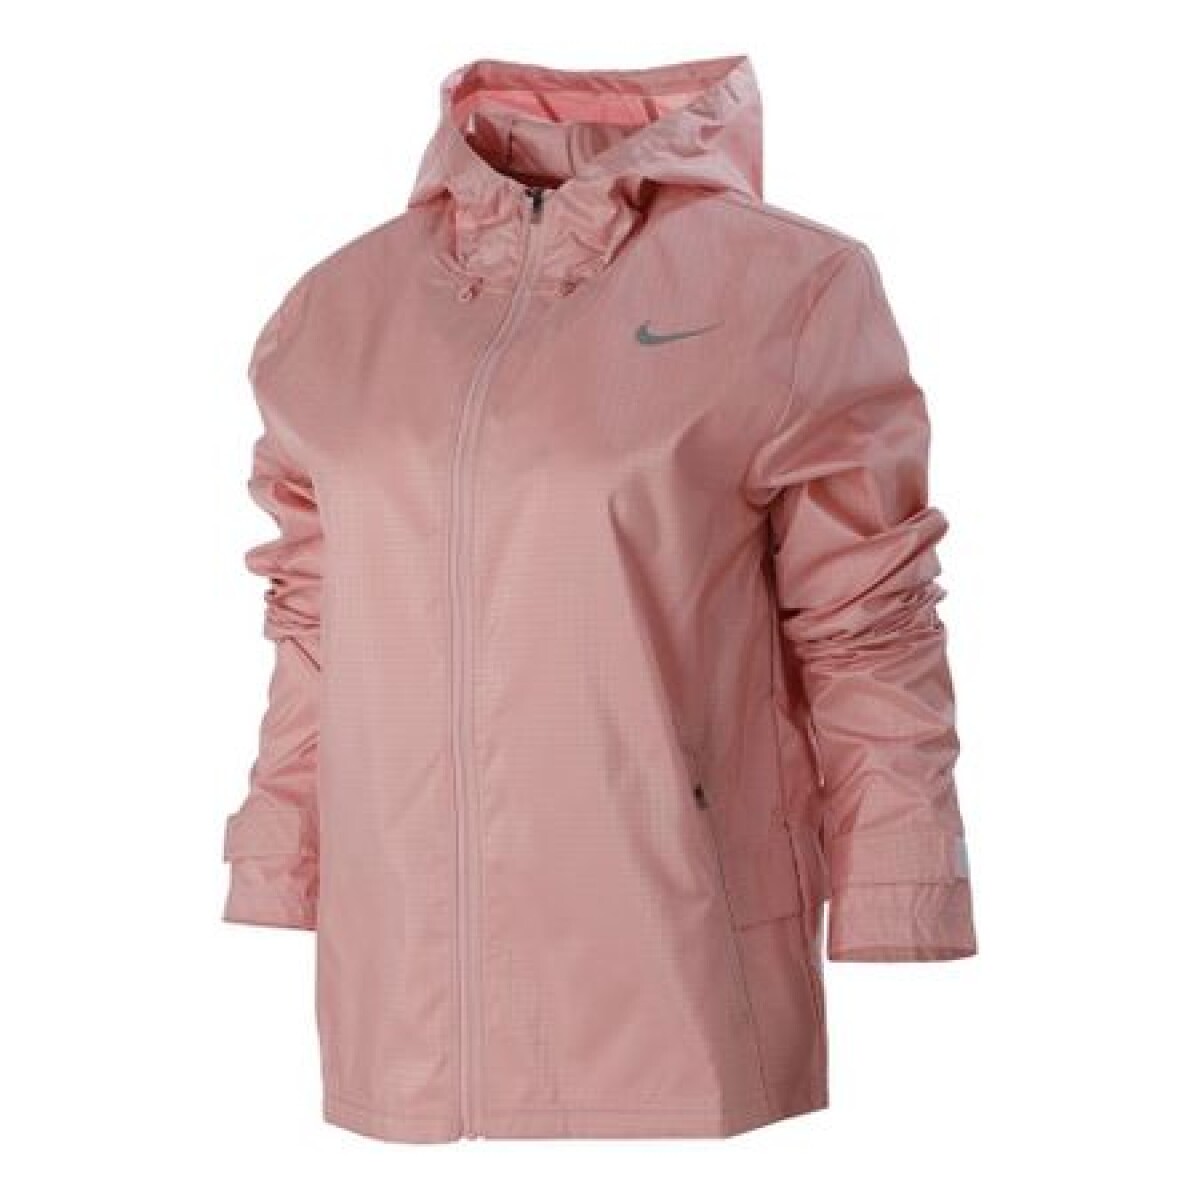 Campera Nike Running Dama Essential Jacket Pink Glaze/(REFLECTIVE SILV) - S/C 